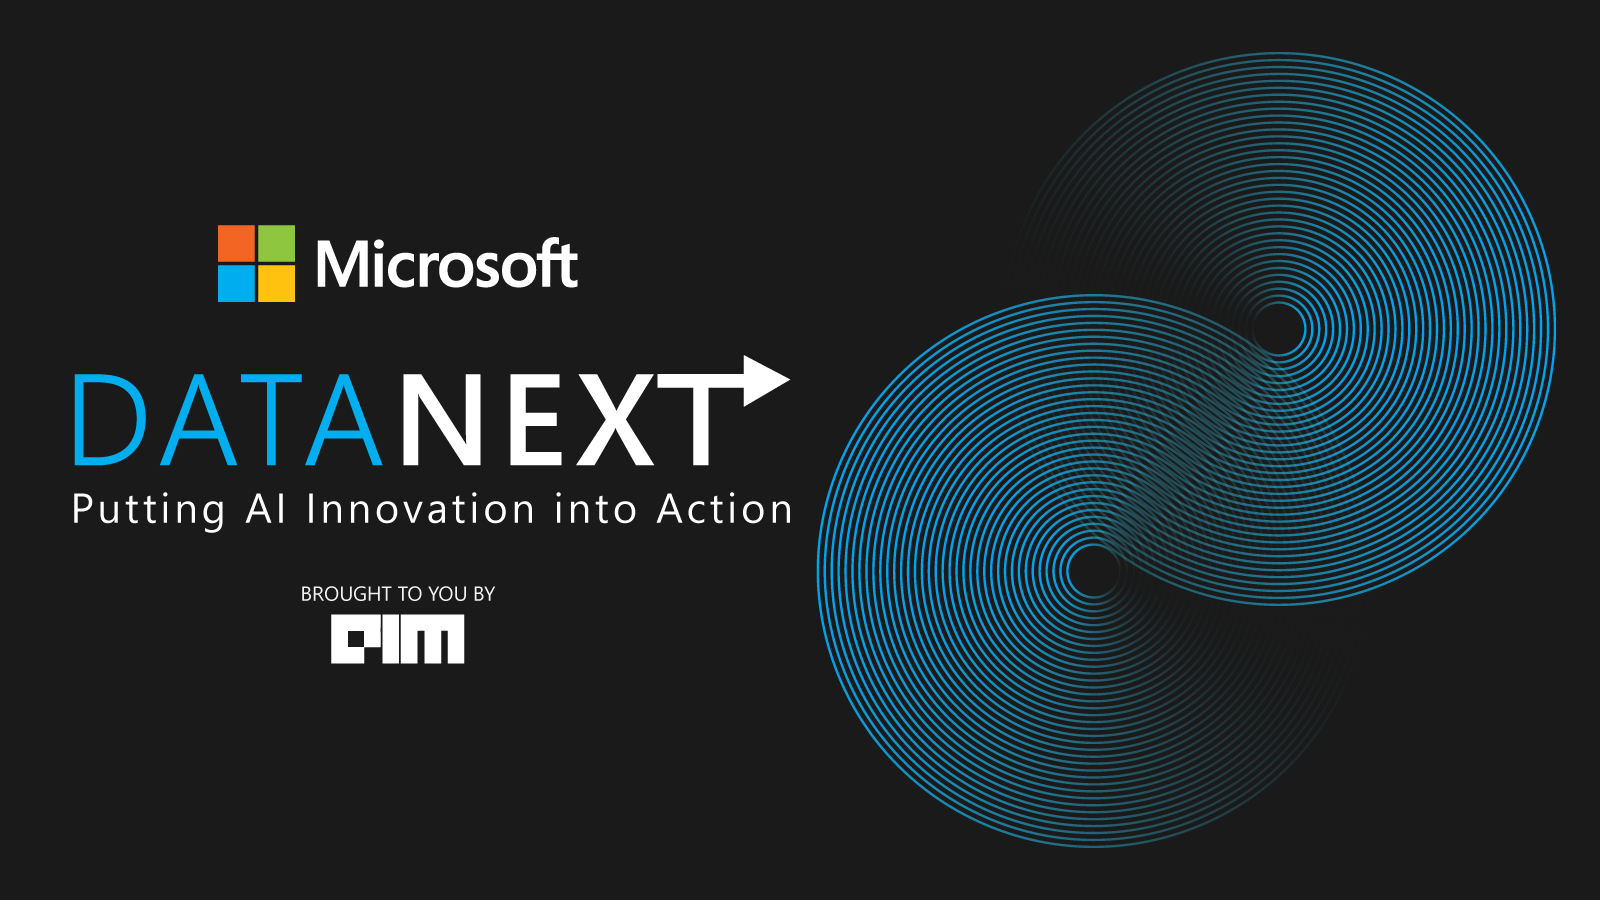 Microsoft announces Virtual Data & AI Conference, Microsoft DataNext: Putting AI Innovation into Action